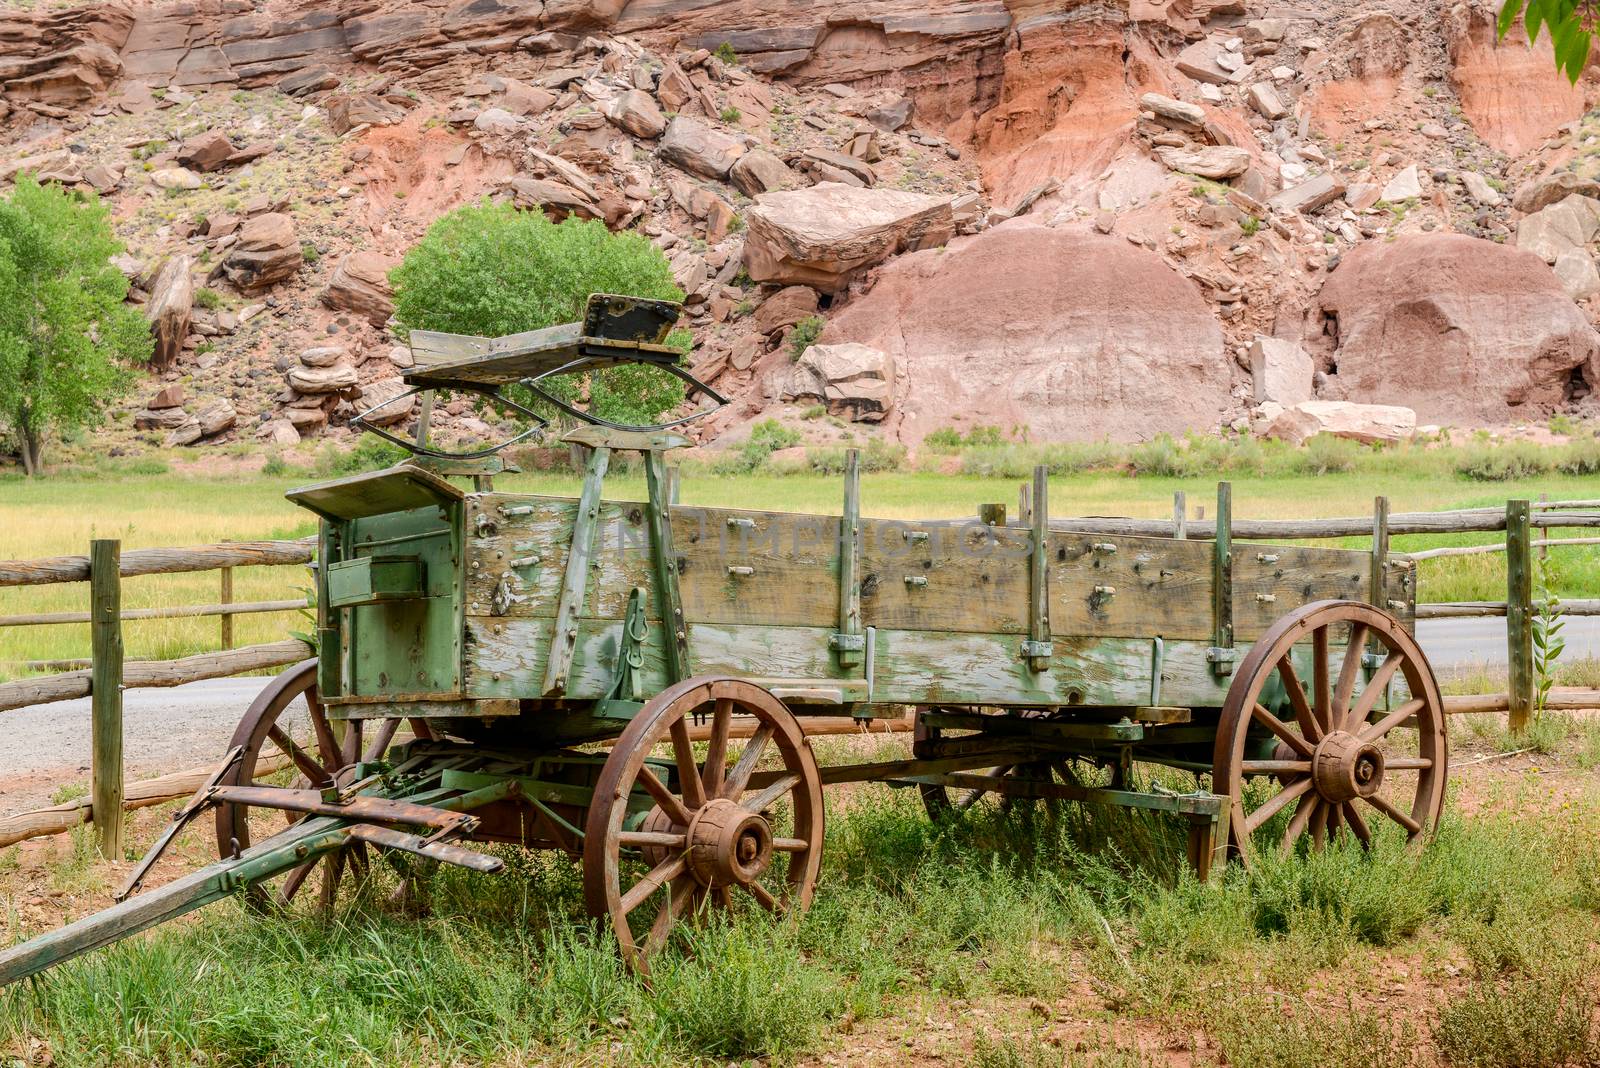 Antique wagon cart in Fruita, Capitol Reef National Park, Utah by Njean